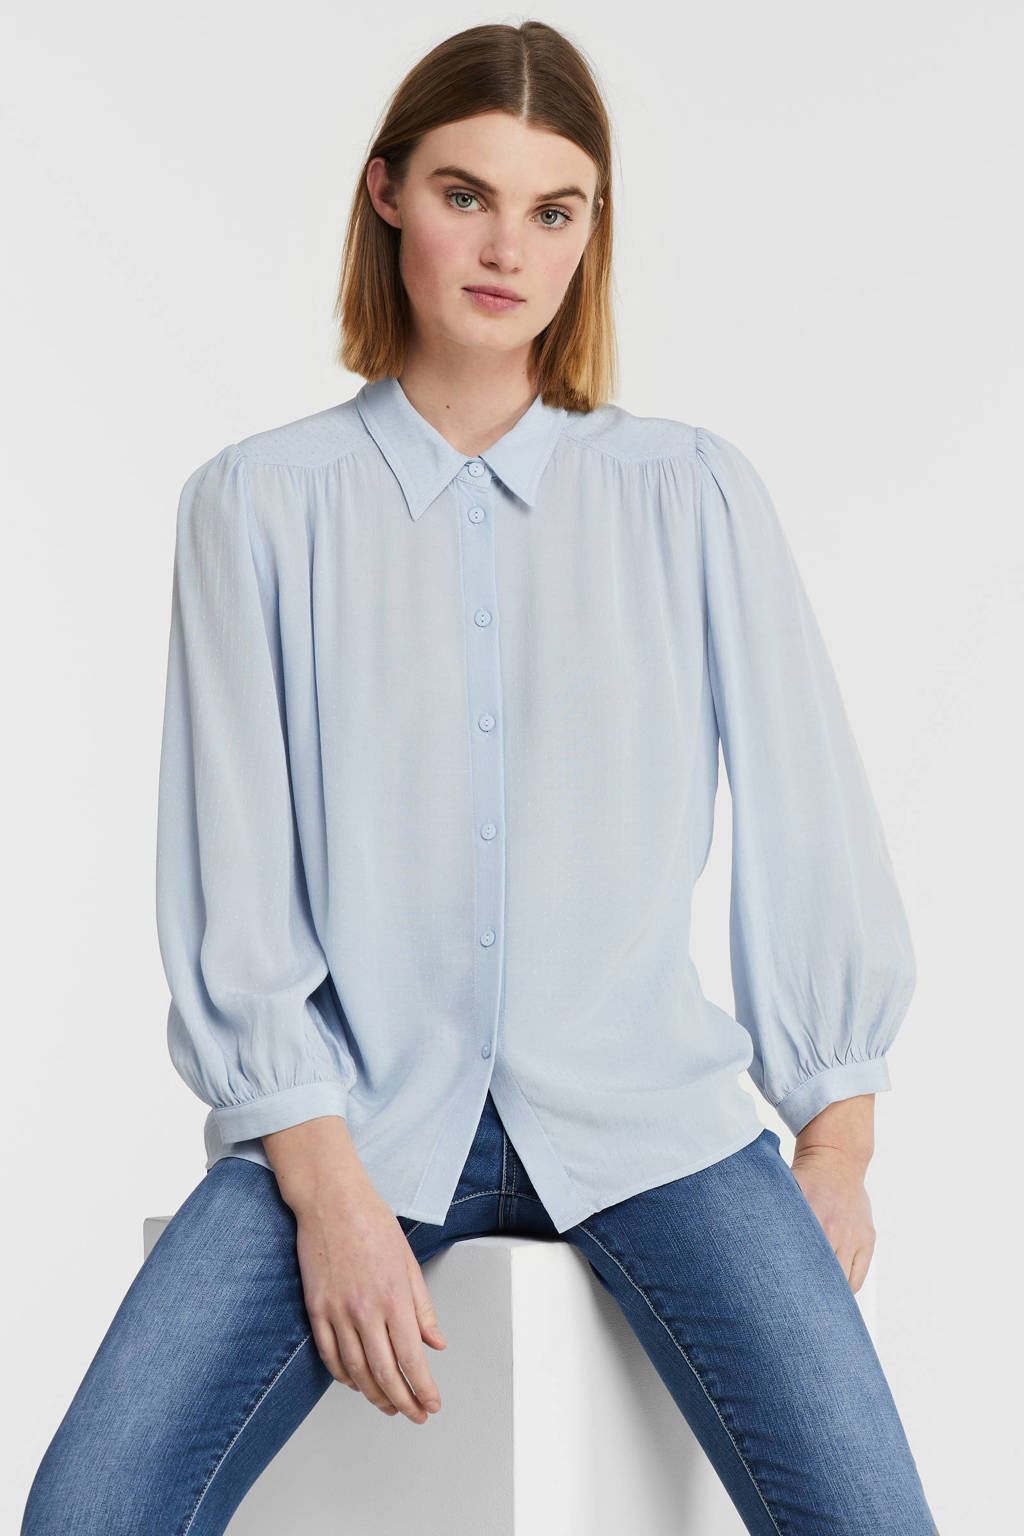 Lichtblauwe dames Esqualo blouse van viscose met lange mouwen, klassieke kraag, knoopsluiting en pofmouwen